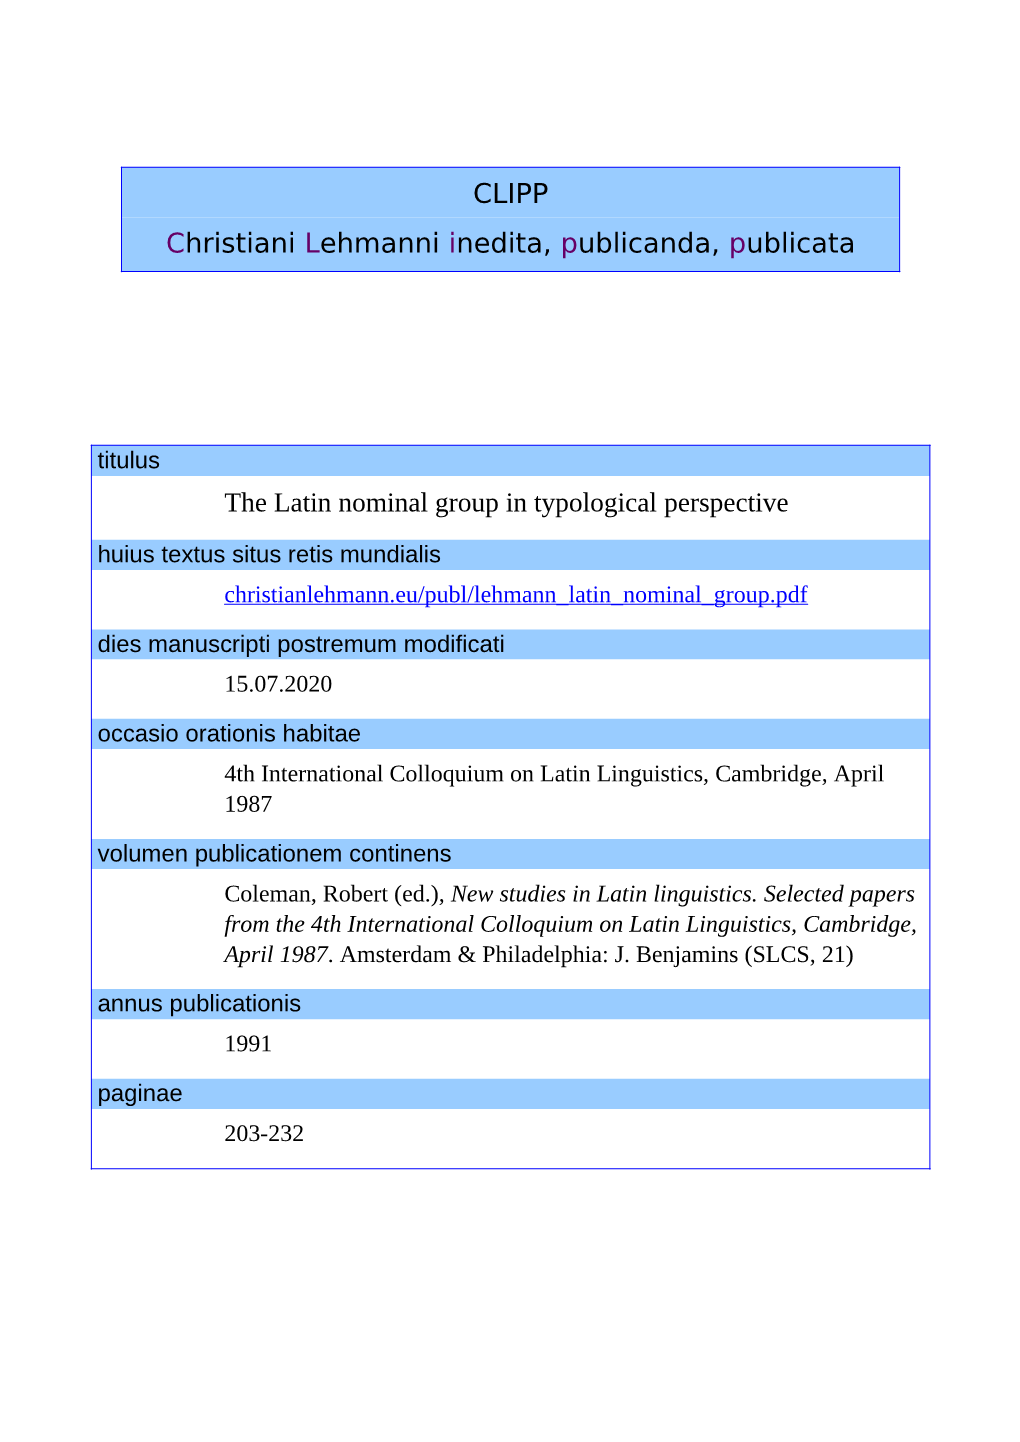 CLIPP Christiani Lehmanni Inedita, Publicanda, Publicata the Latin Nominal Group in Typological Perspective